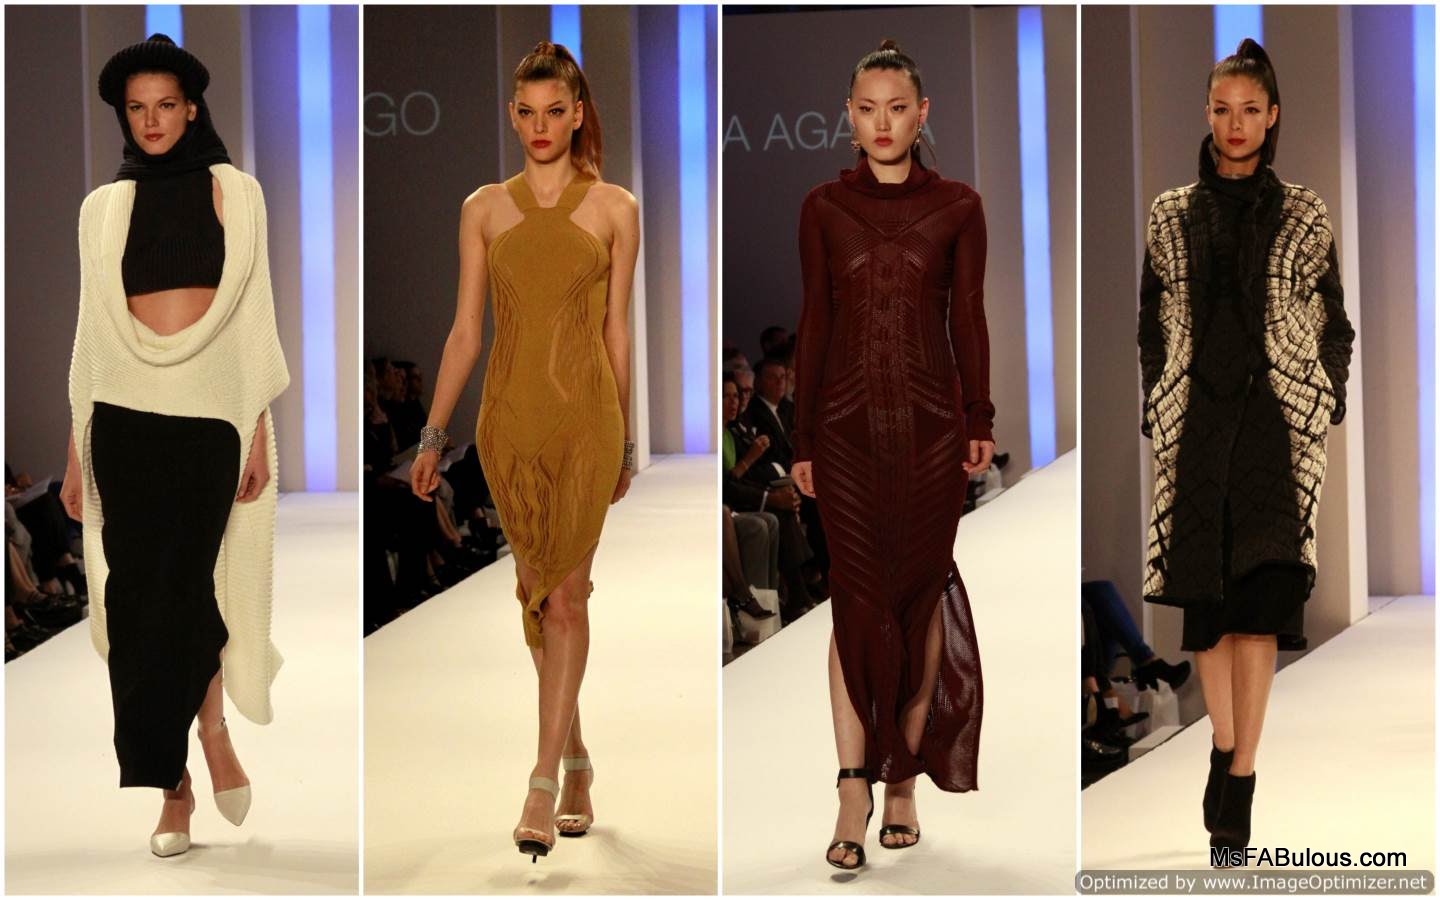 MS. FABULOUS: Future of Fashion 2013 - Knitwear Design fashion design ...